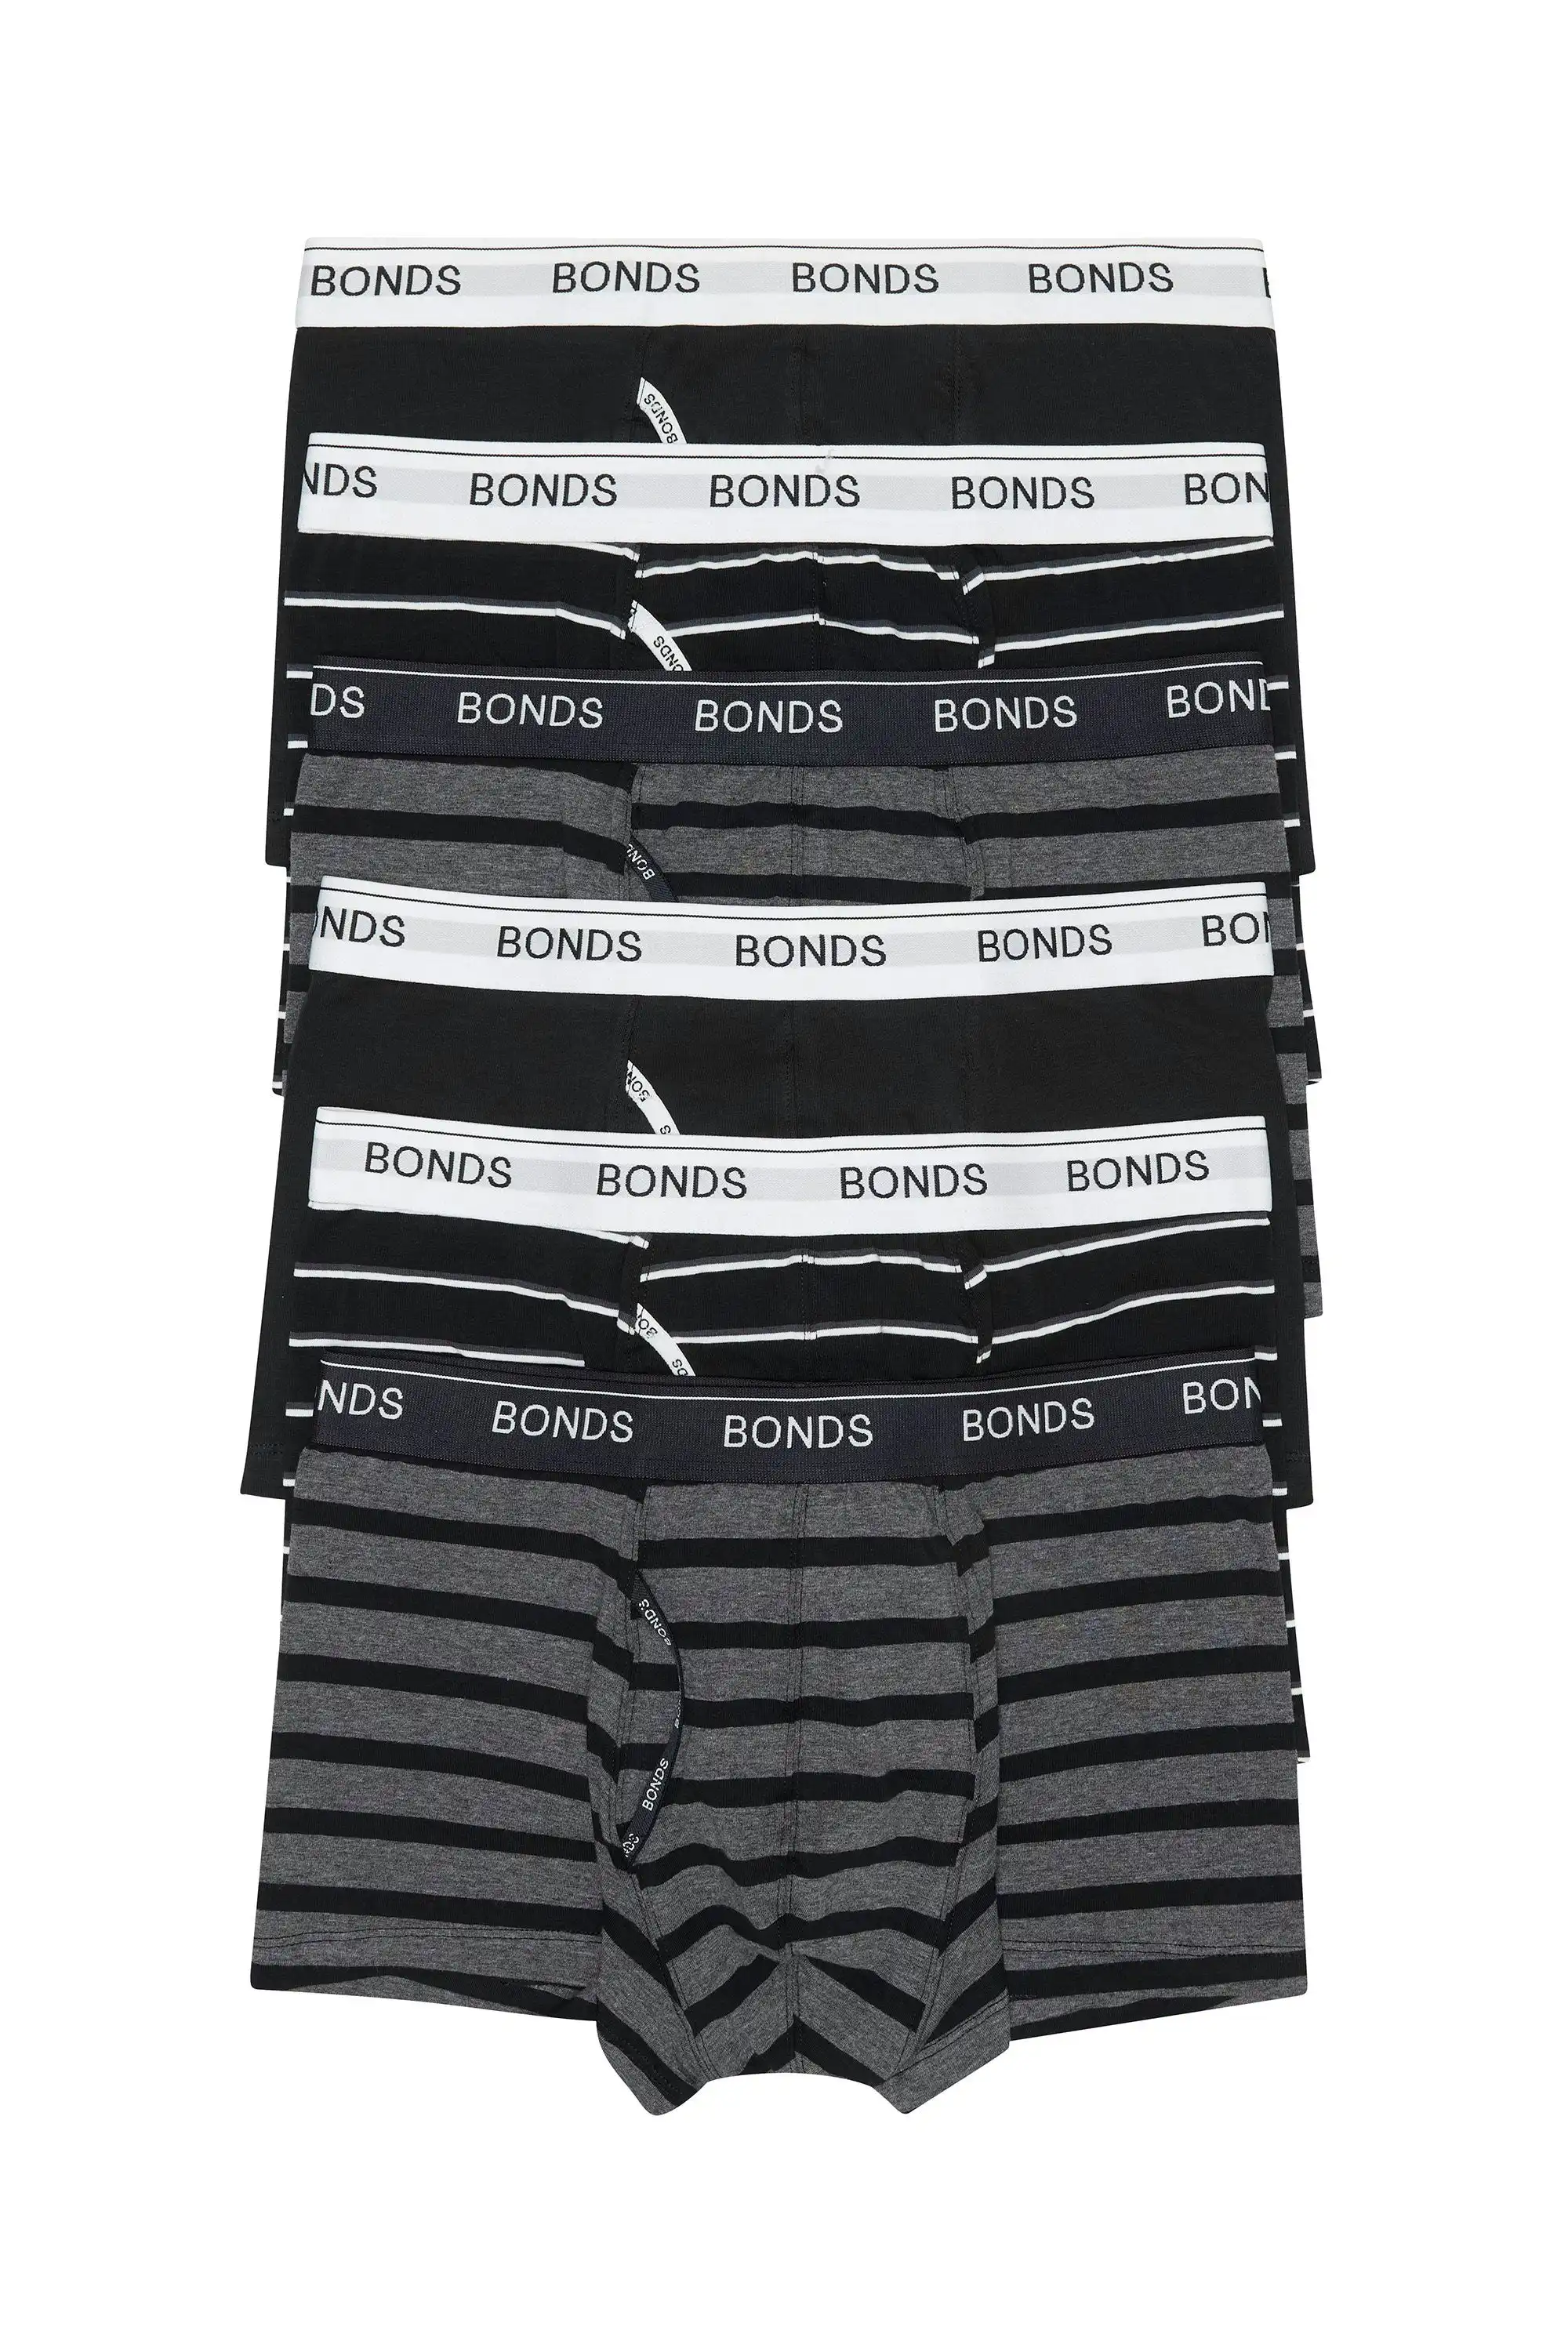 6 x Bonds Mens Guyfront Trunks Underwear Black / Grey Stripe